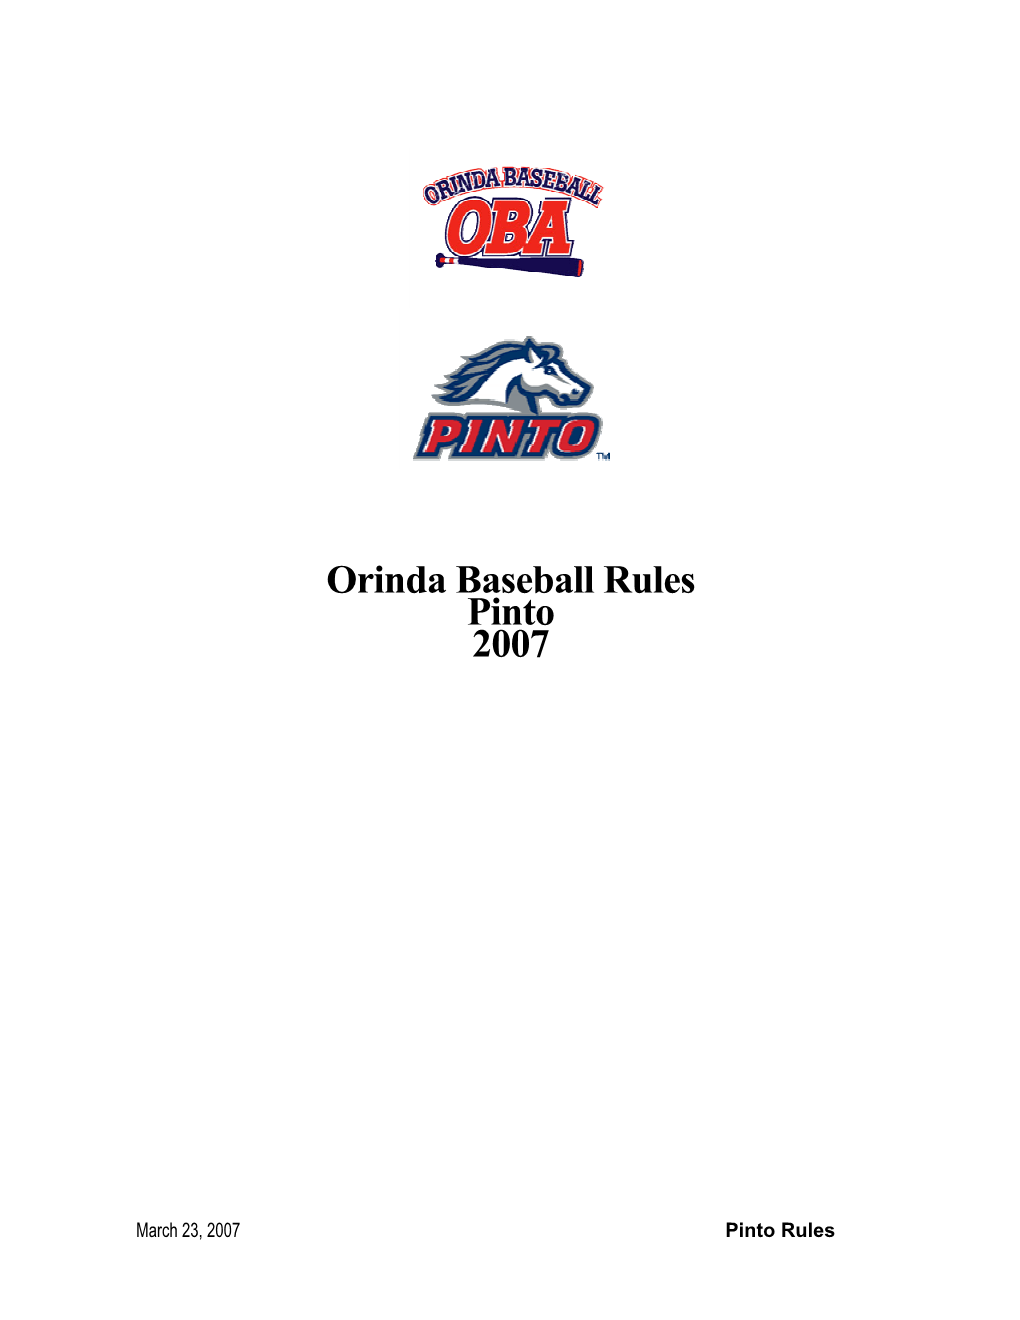 Orinda Baseball Association Pinto Rules - 2007